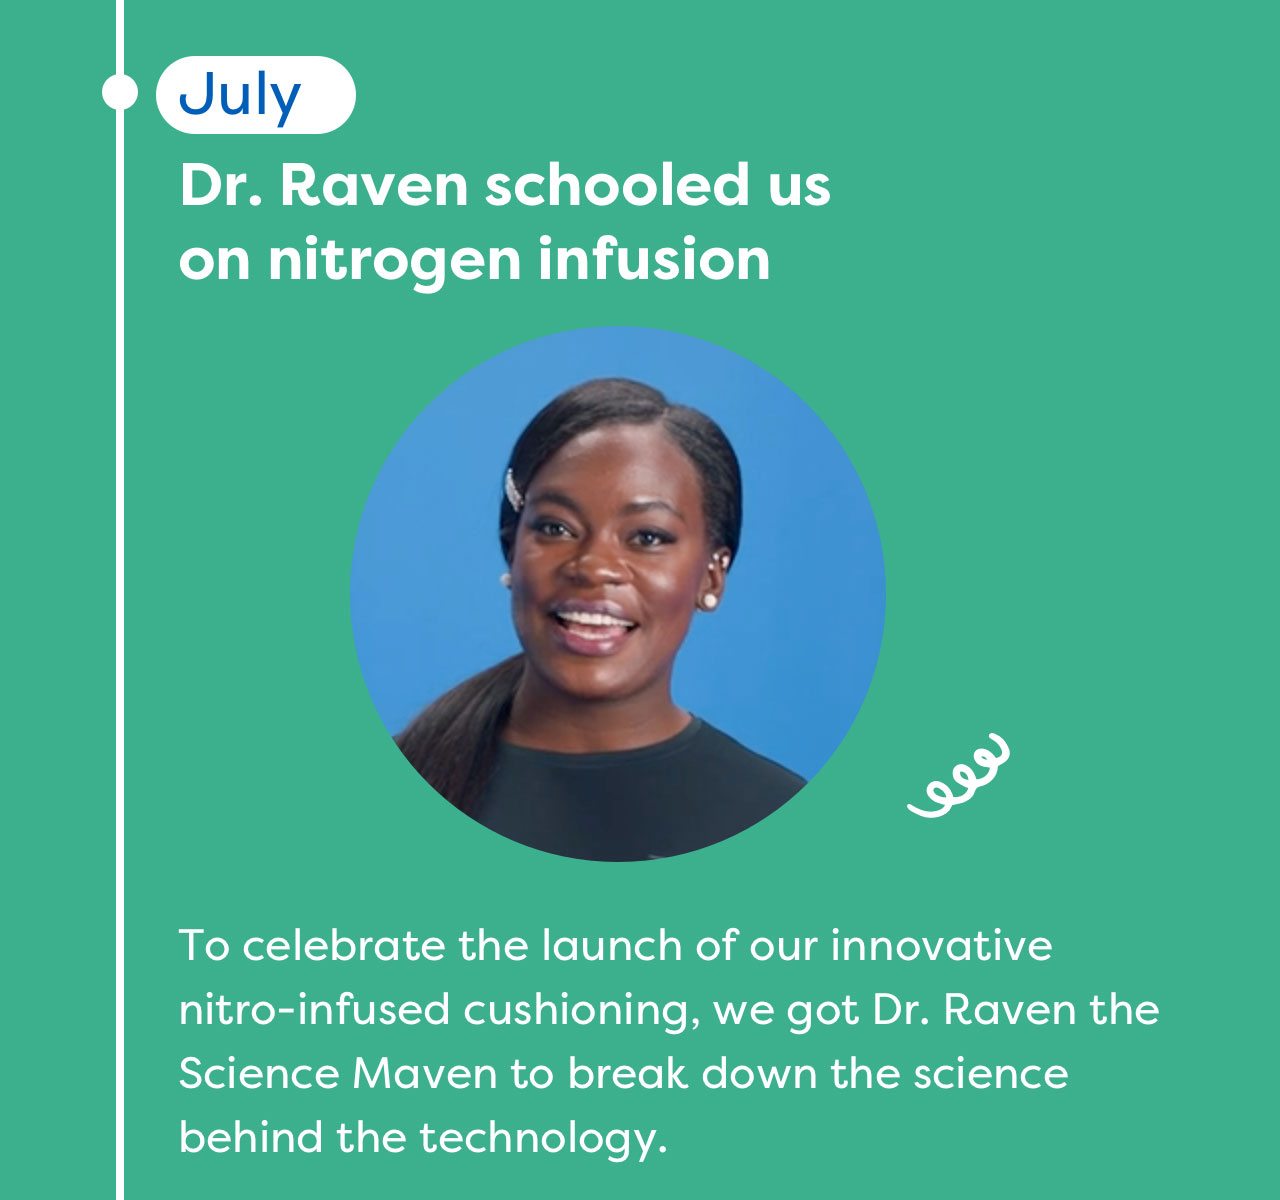 Dr. Raven schooled us on nitrogen infusion